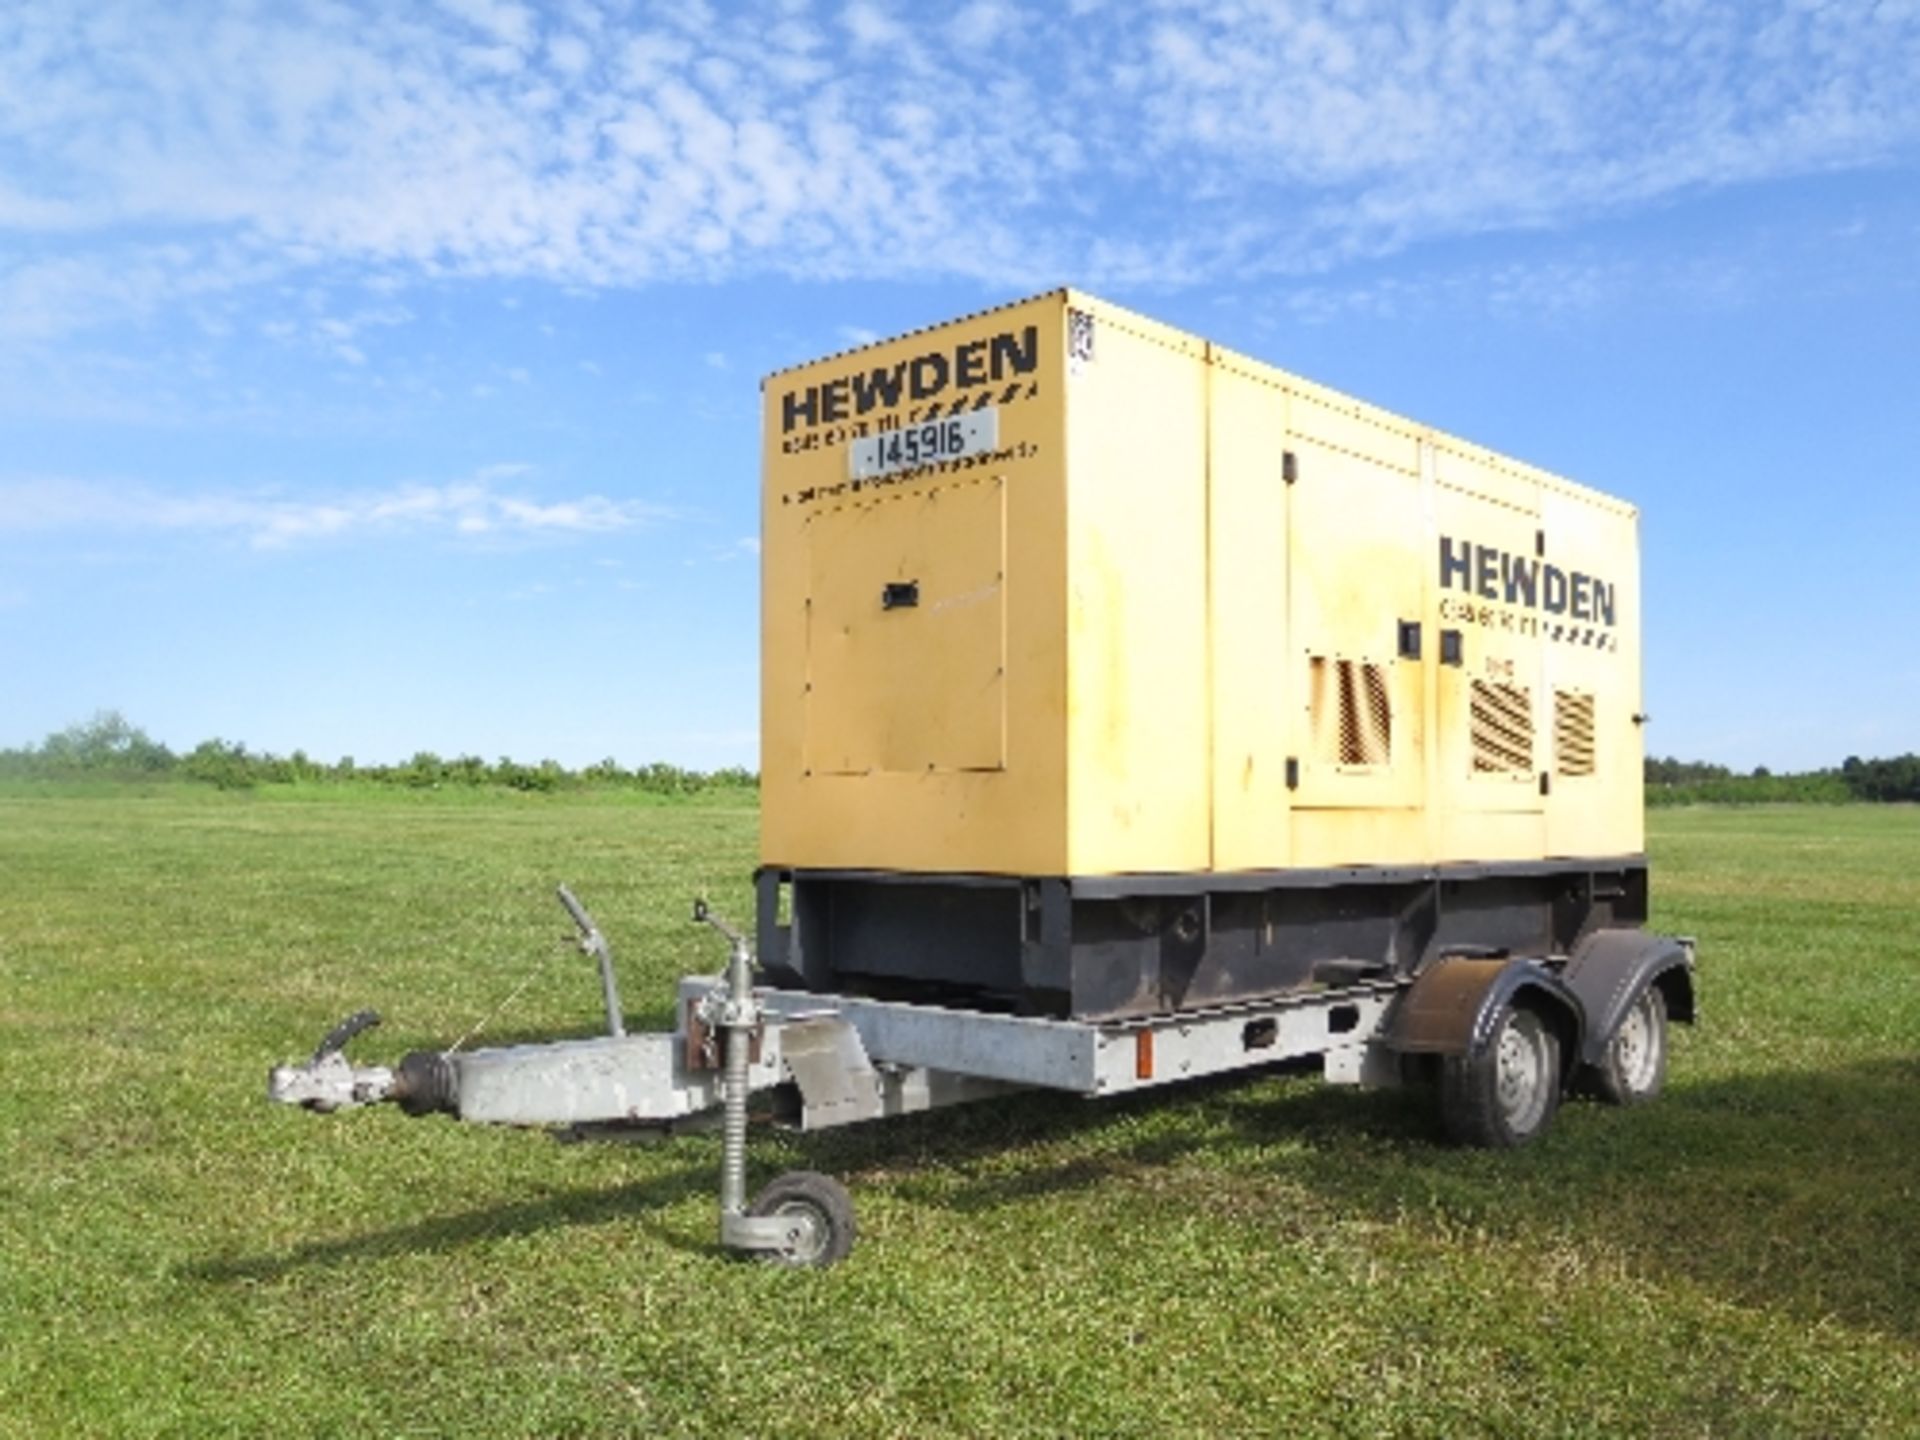 Caterpillar XQE100 trailer mounted generator 15455 hrs 145916
PERKINS - RUNS AND MAKES POWER
FAN